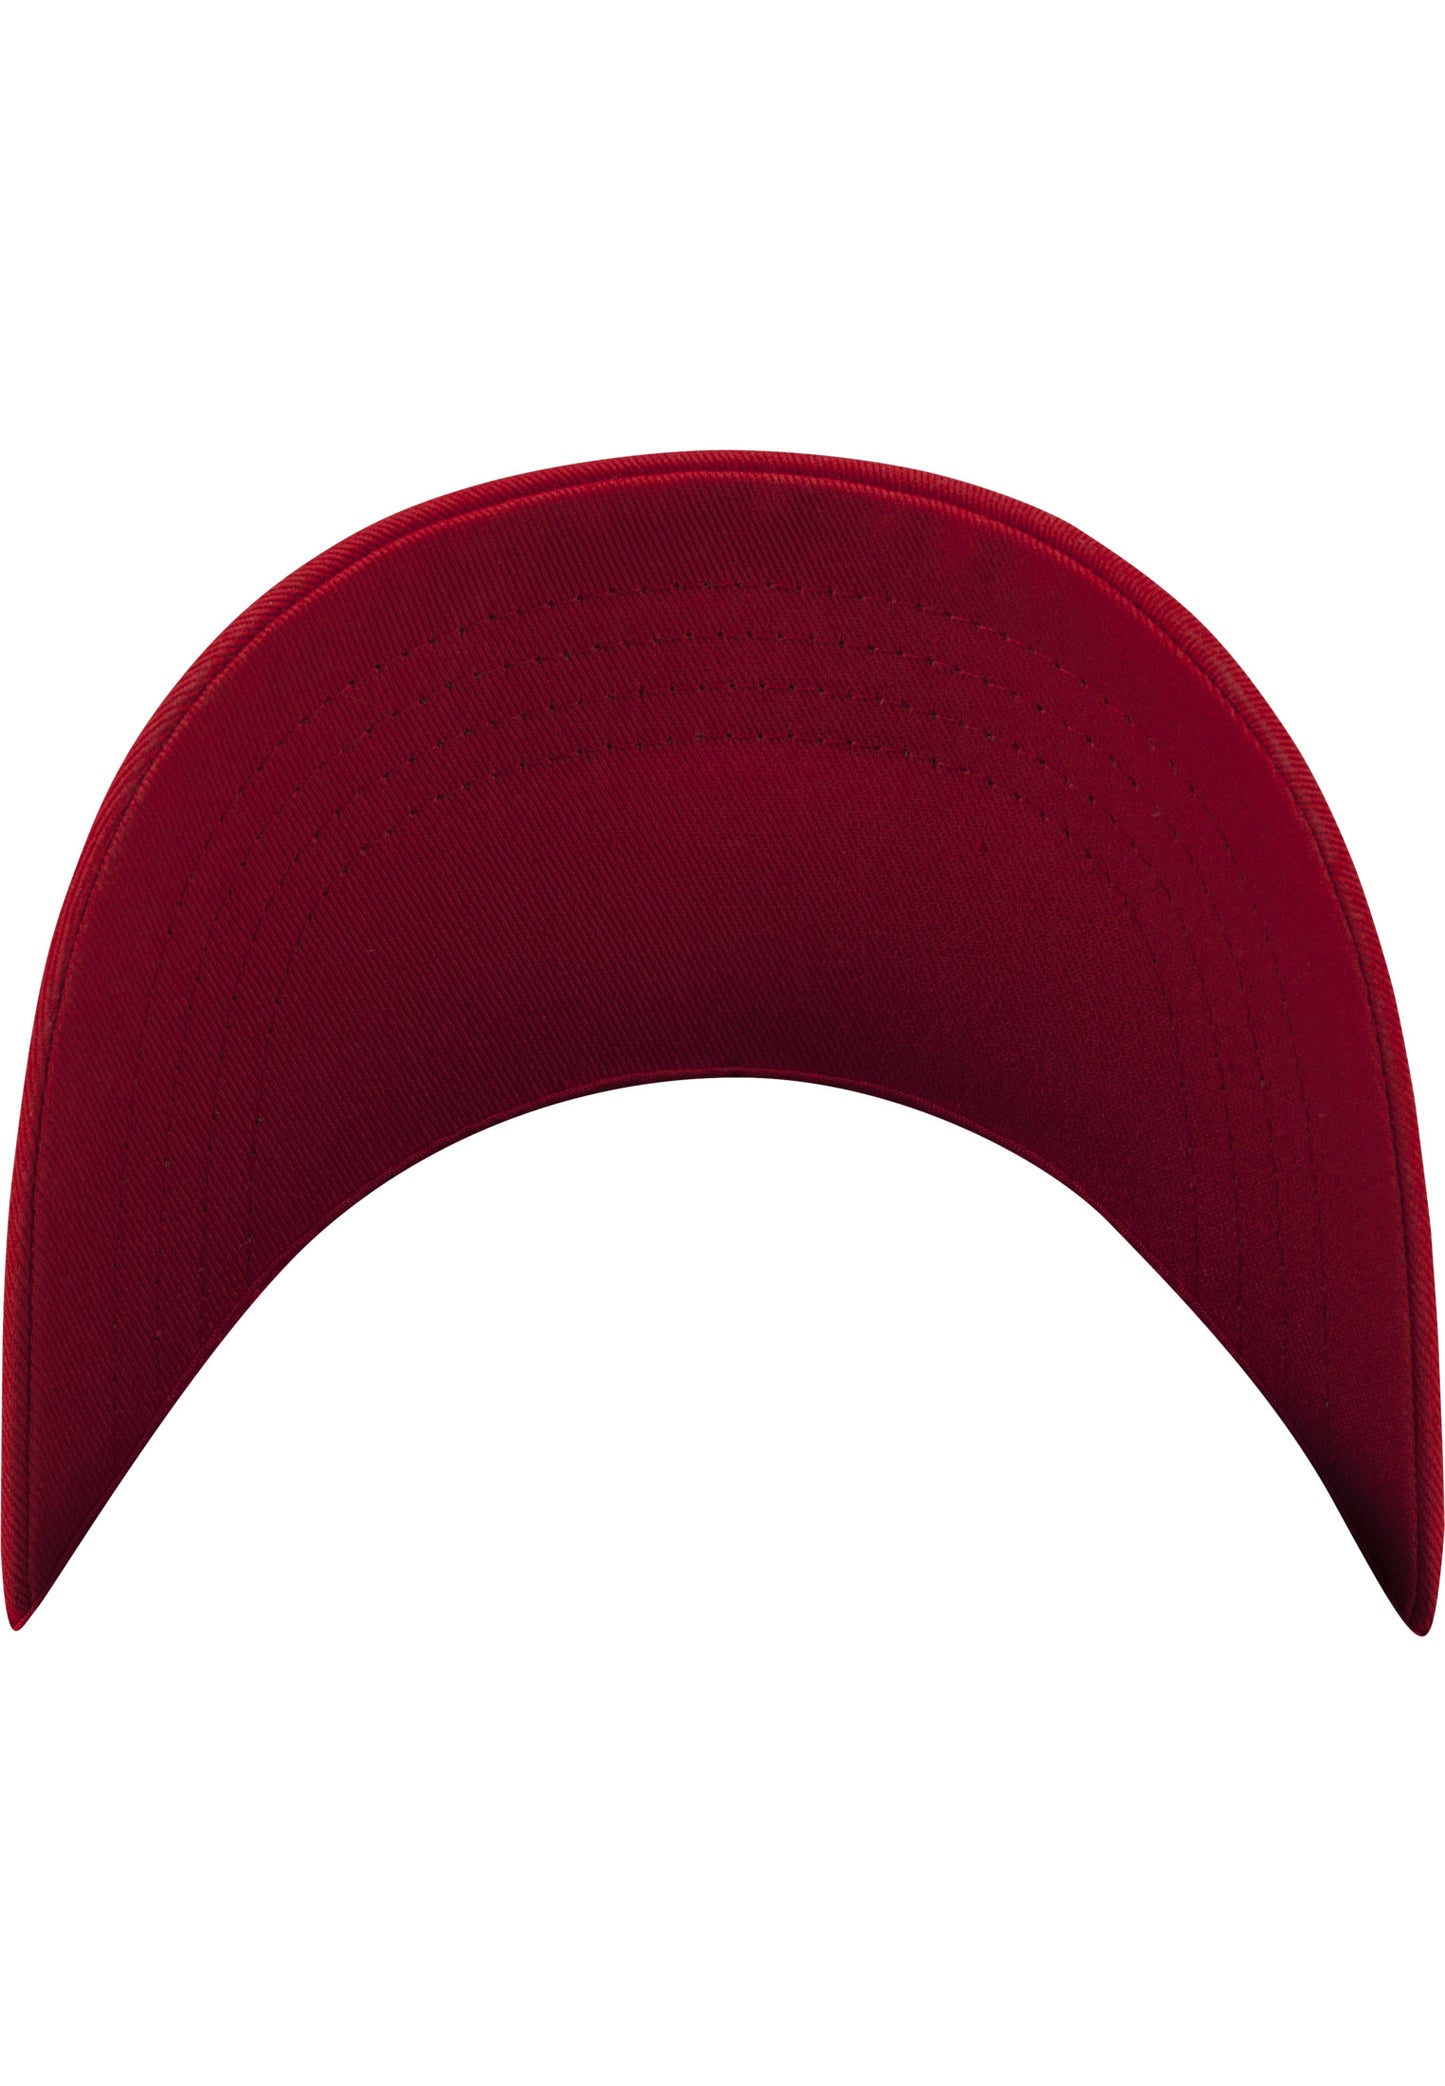 Low Profile Cotton Twill - Red - Headz Up 